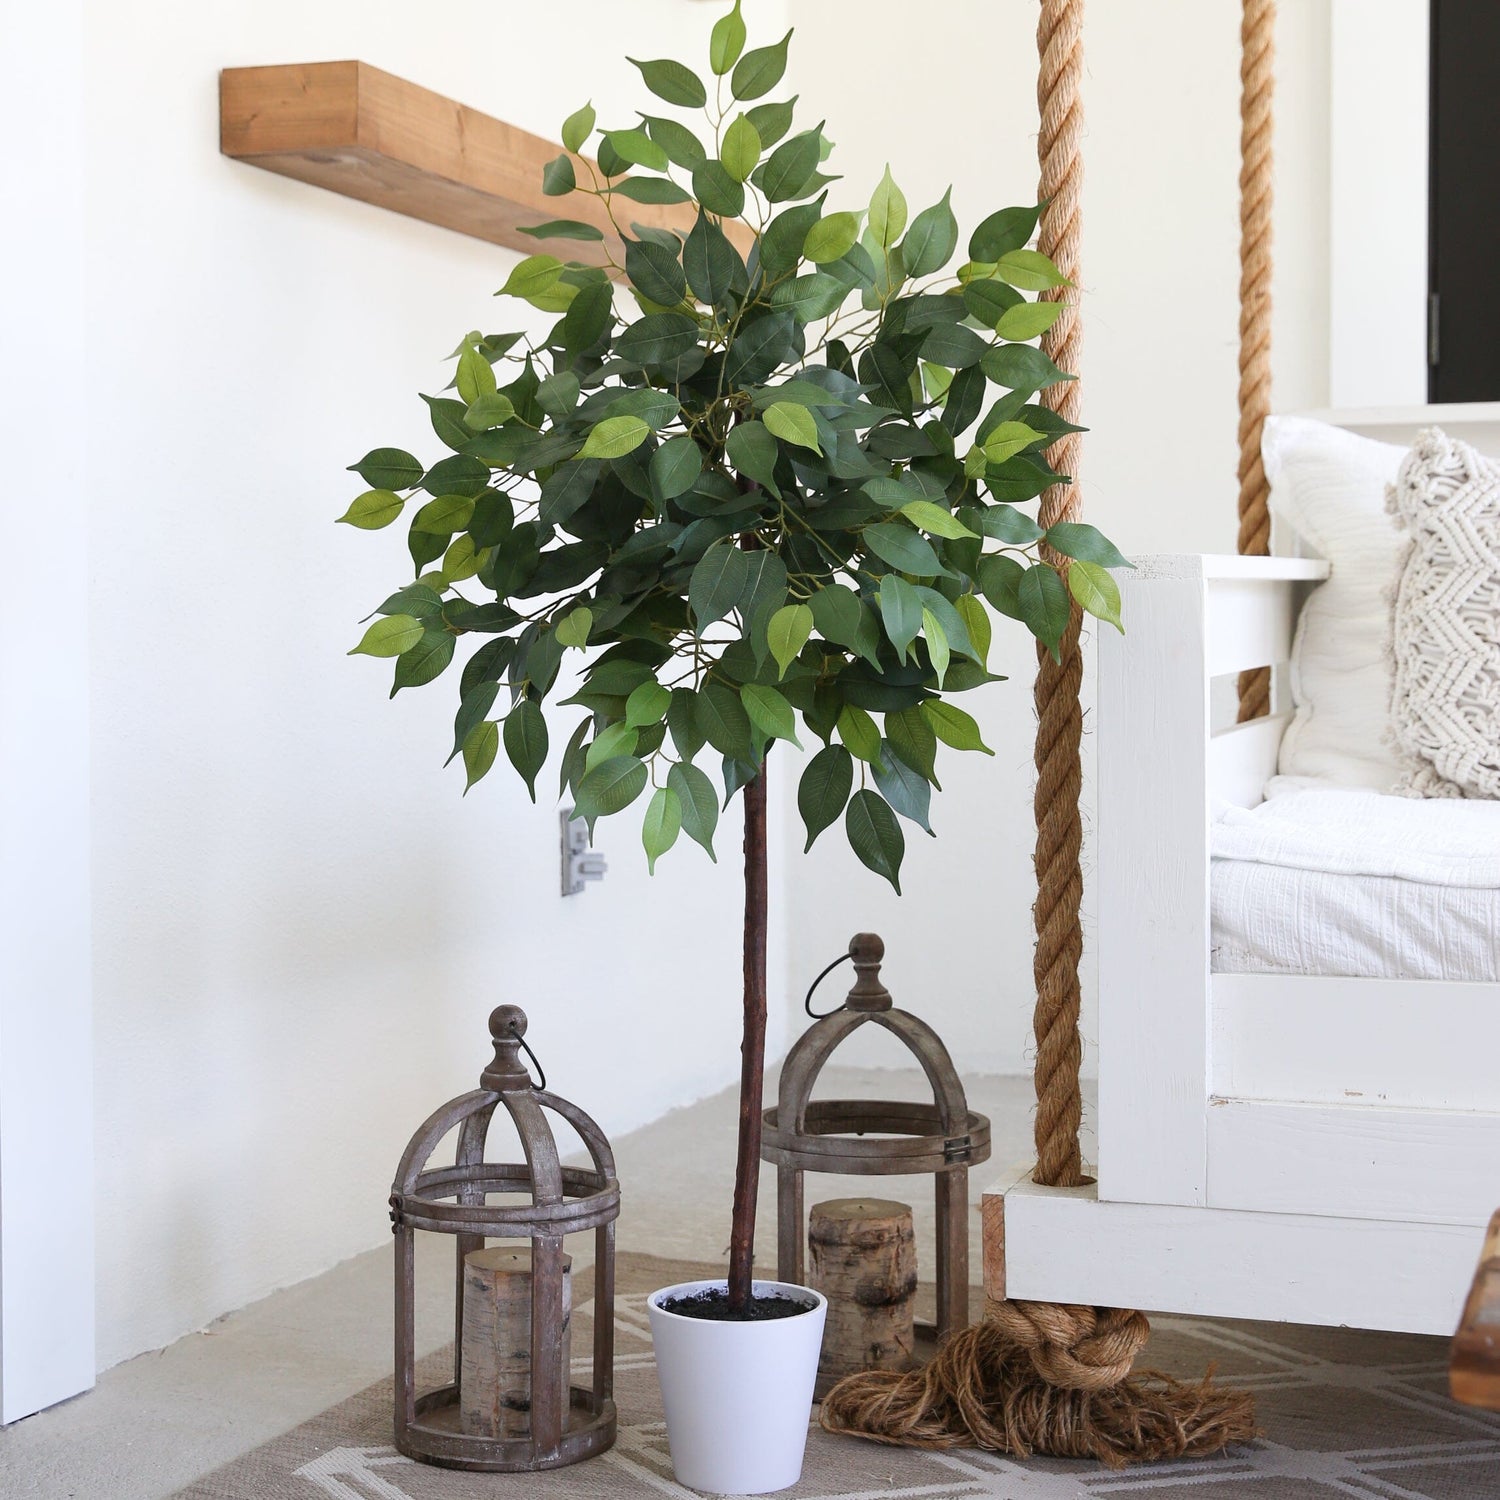 4’ Artificial Ficus Tree with Decorative Planter